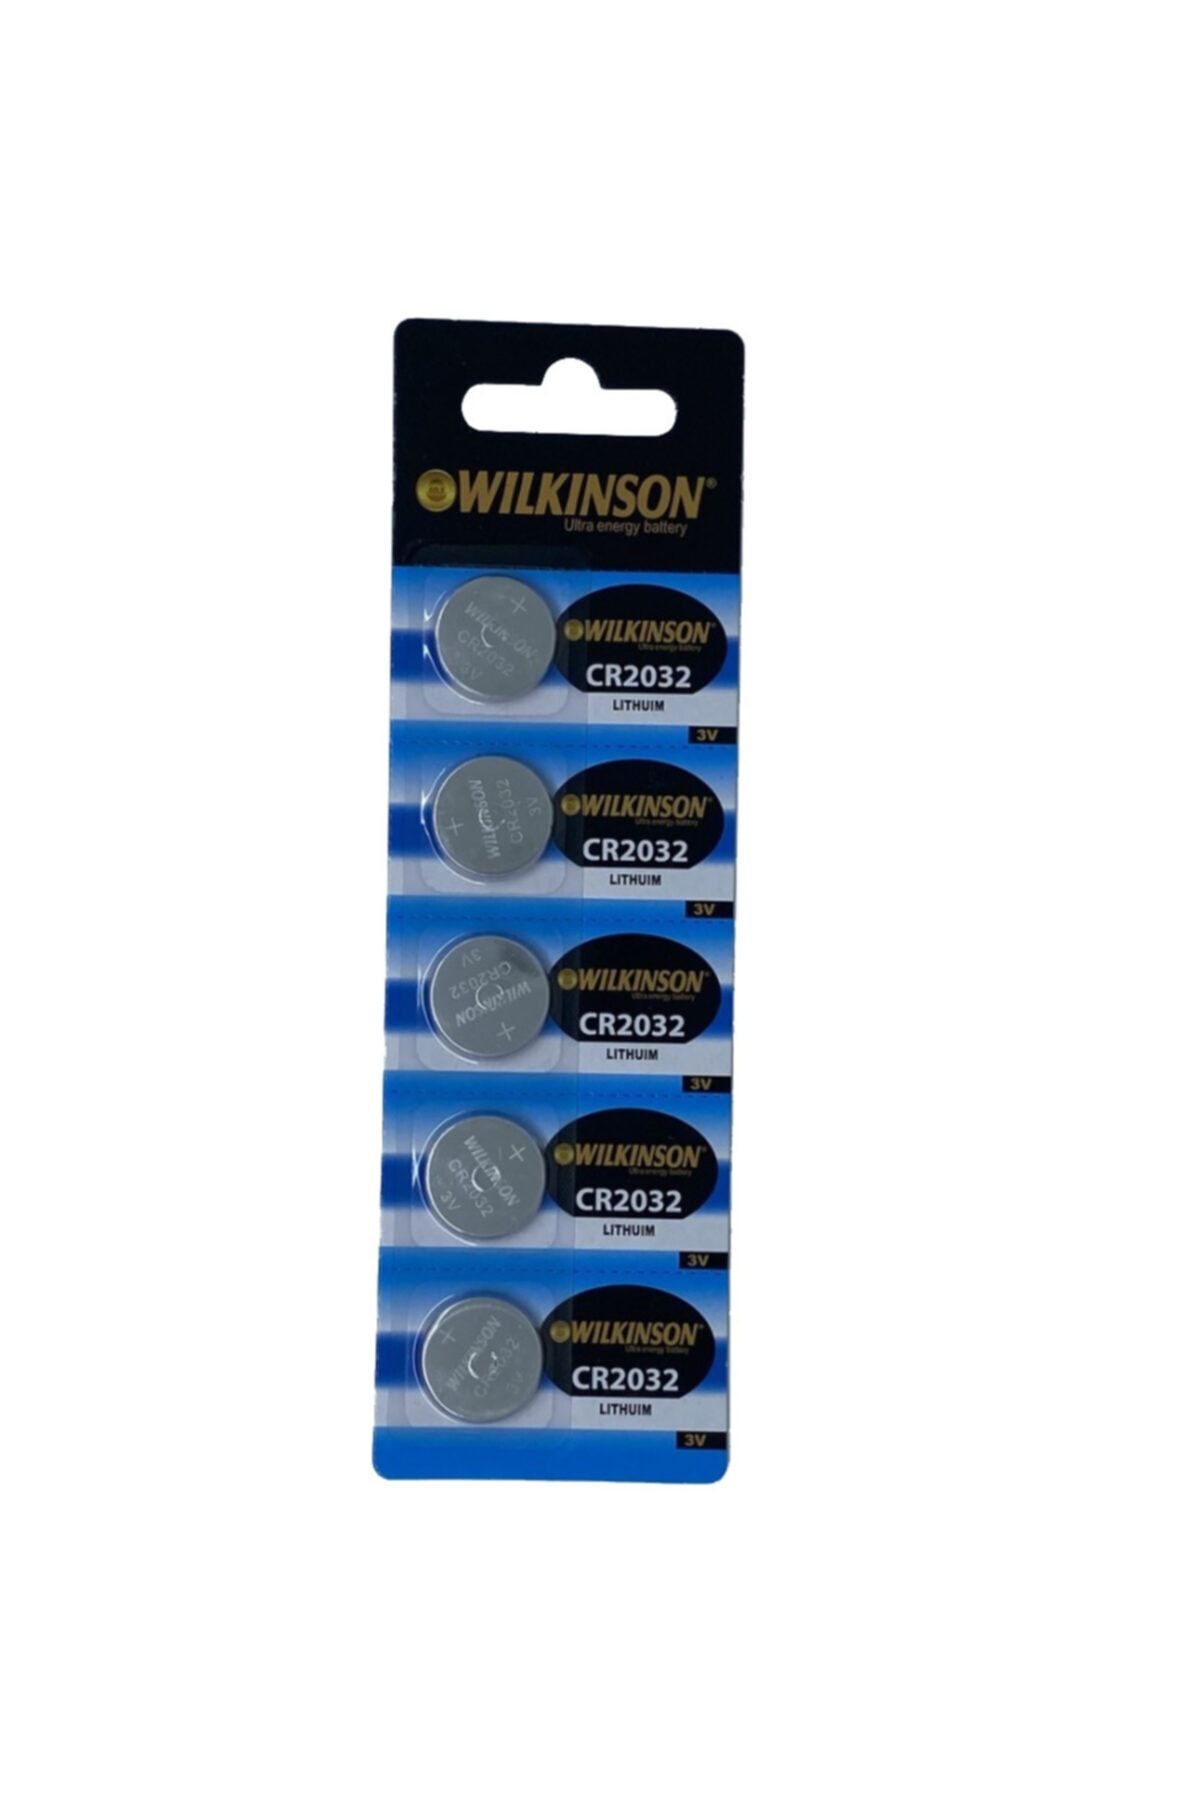 Skygo Wilkinson 2032 3v Lityum Düğme Pil 5'li Paket